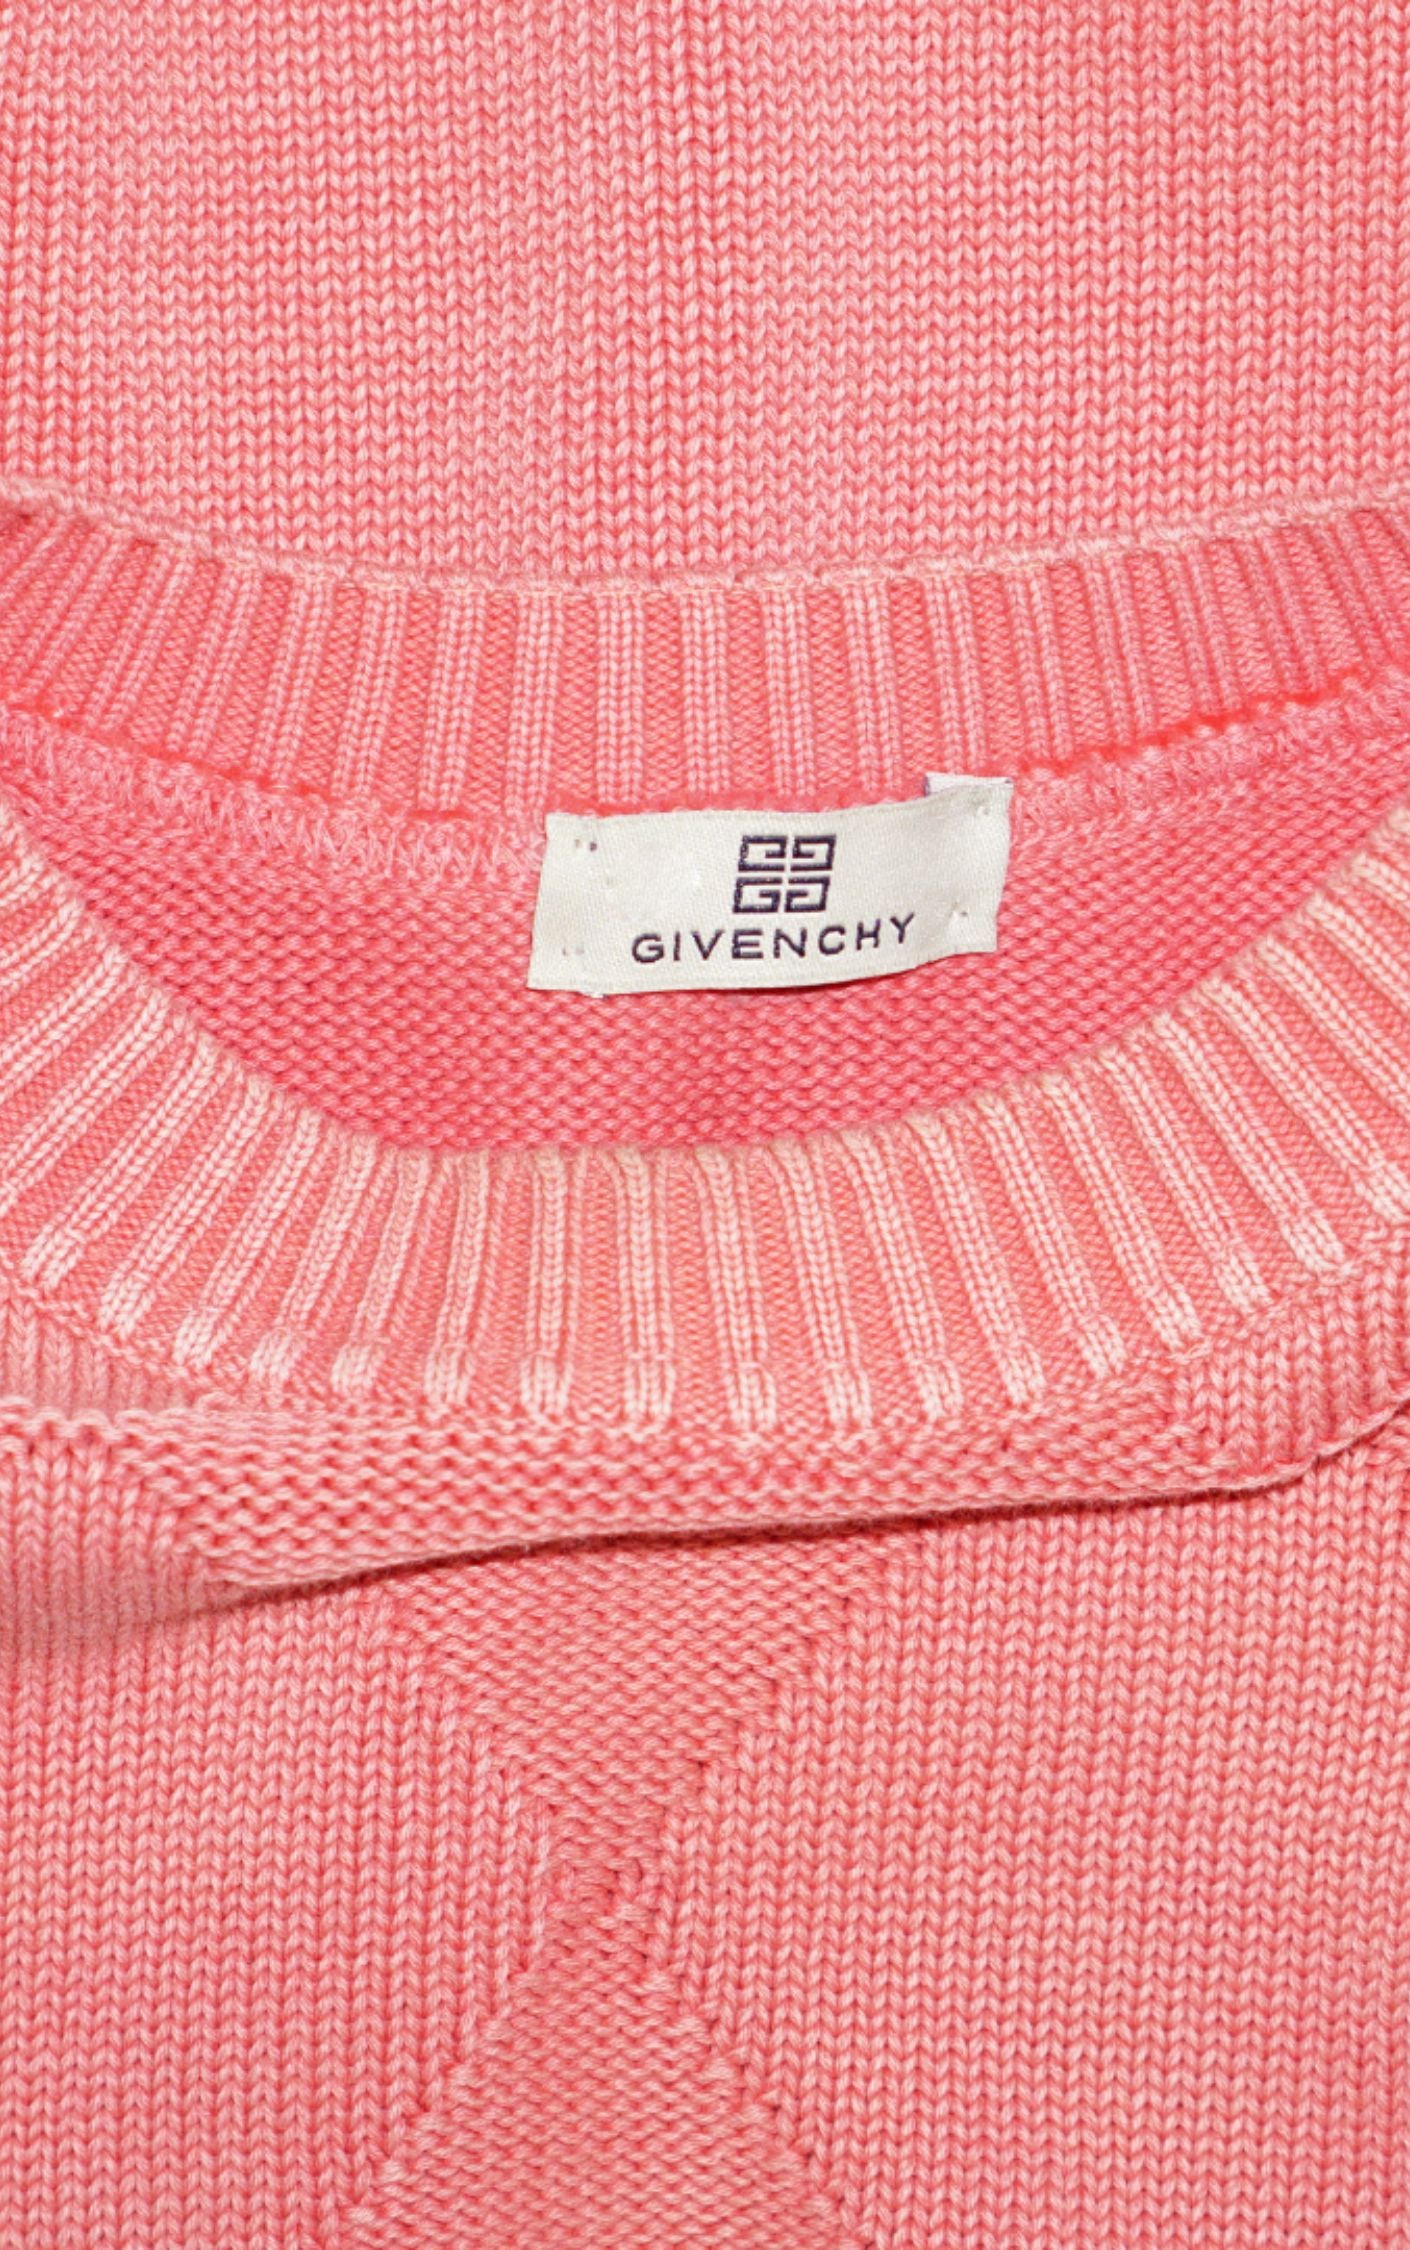 GIVENCHY Pink Rhombus Knit Crewneck Sweater